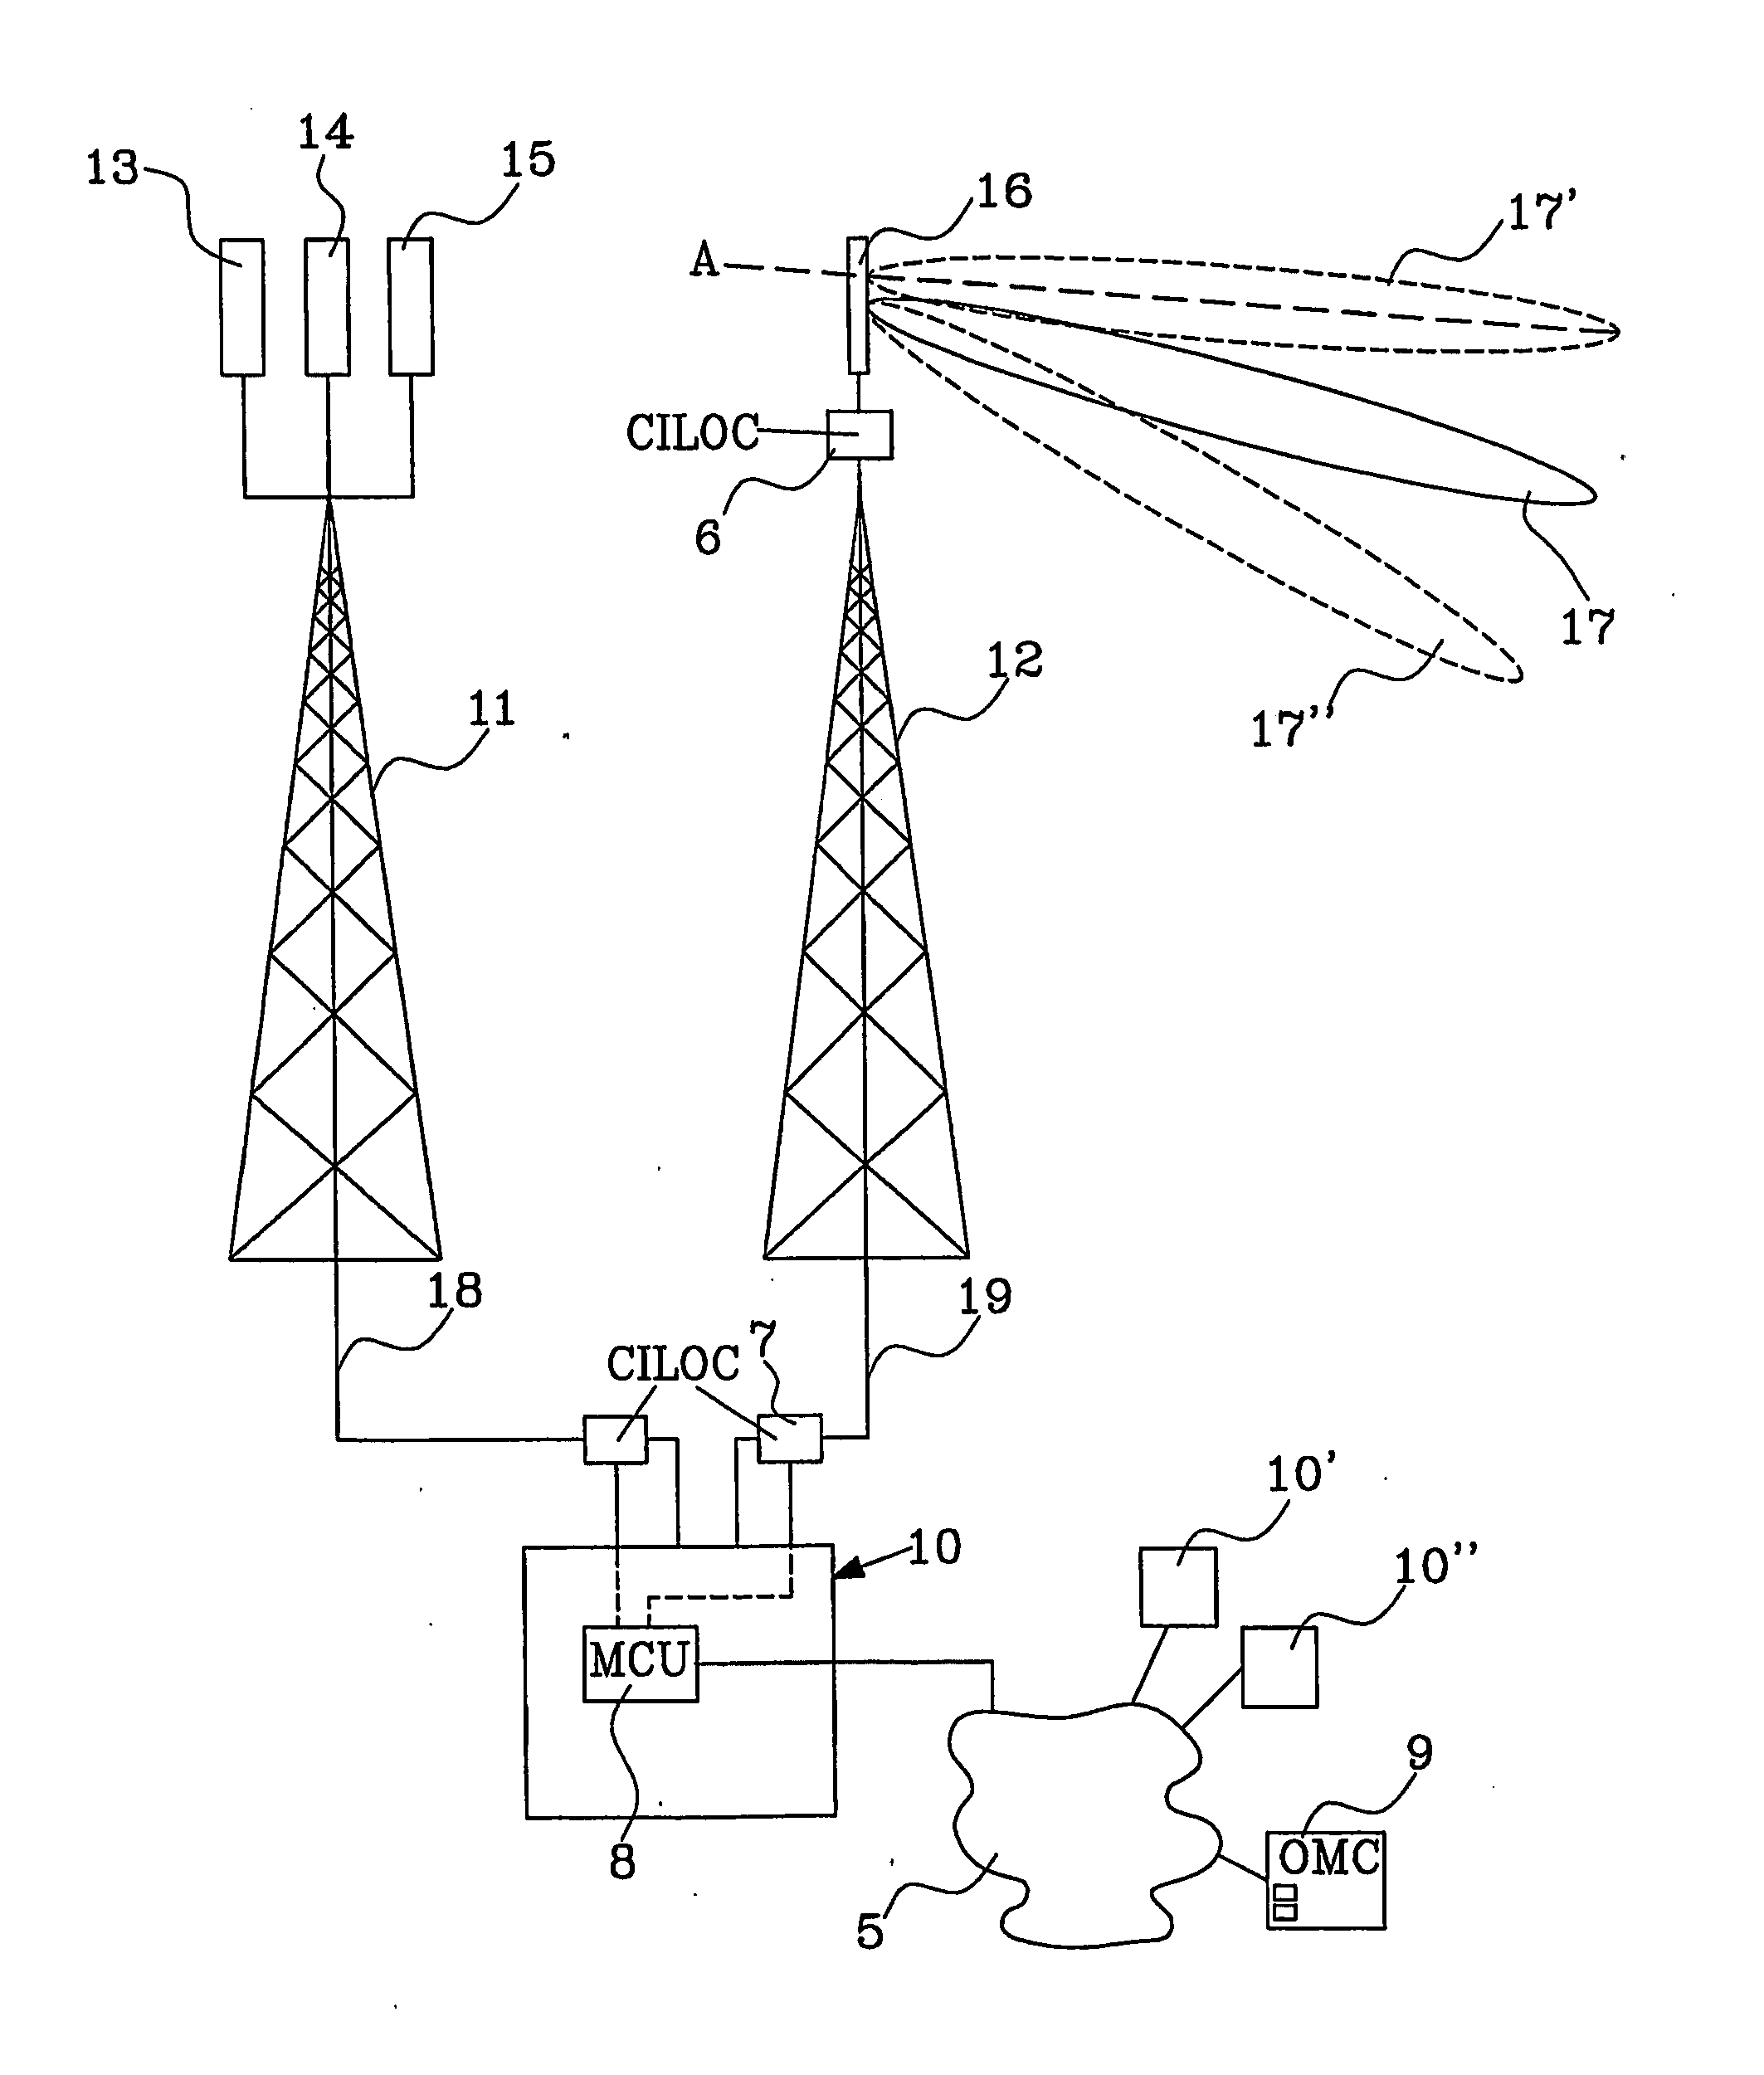 Antenna Control System